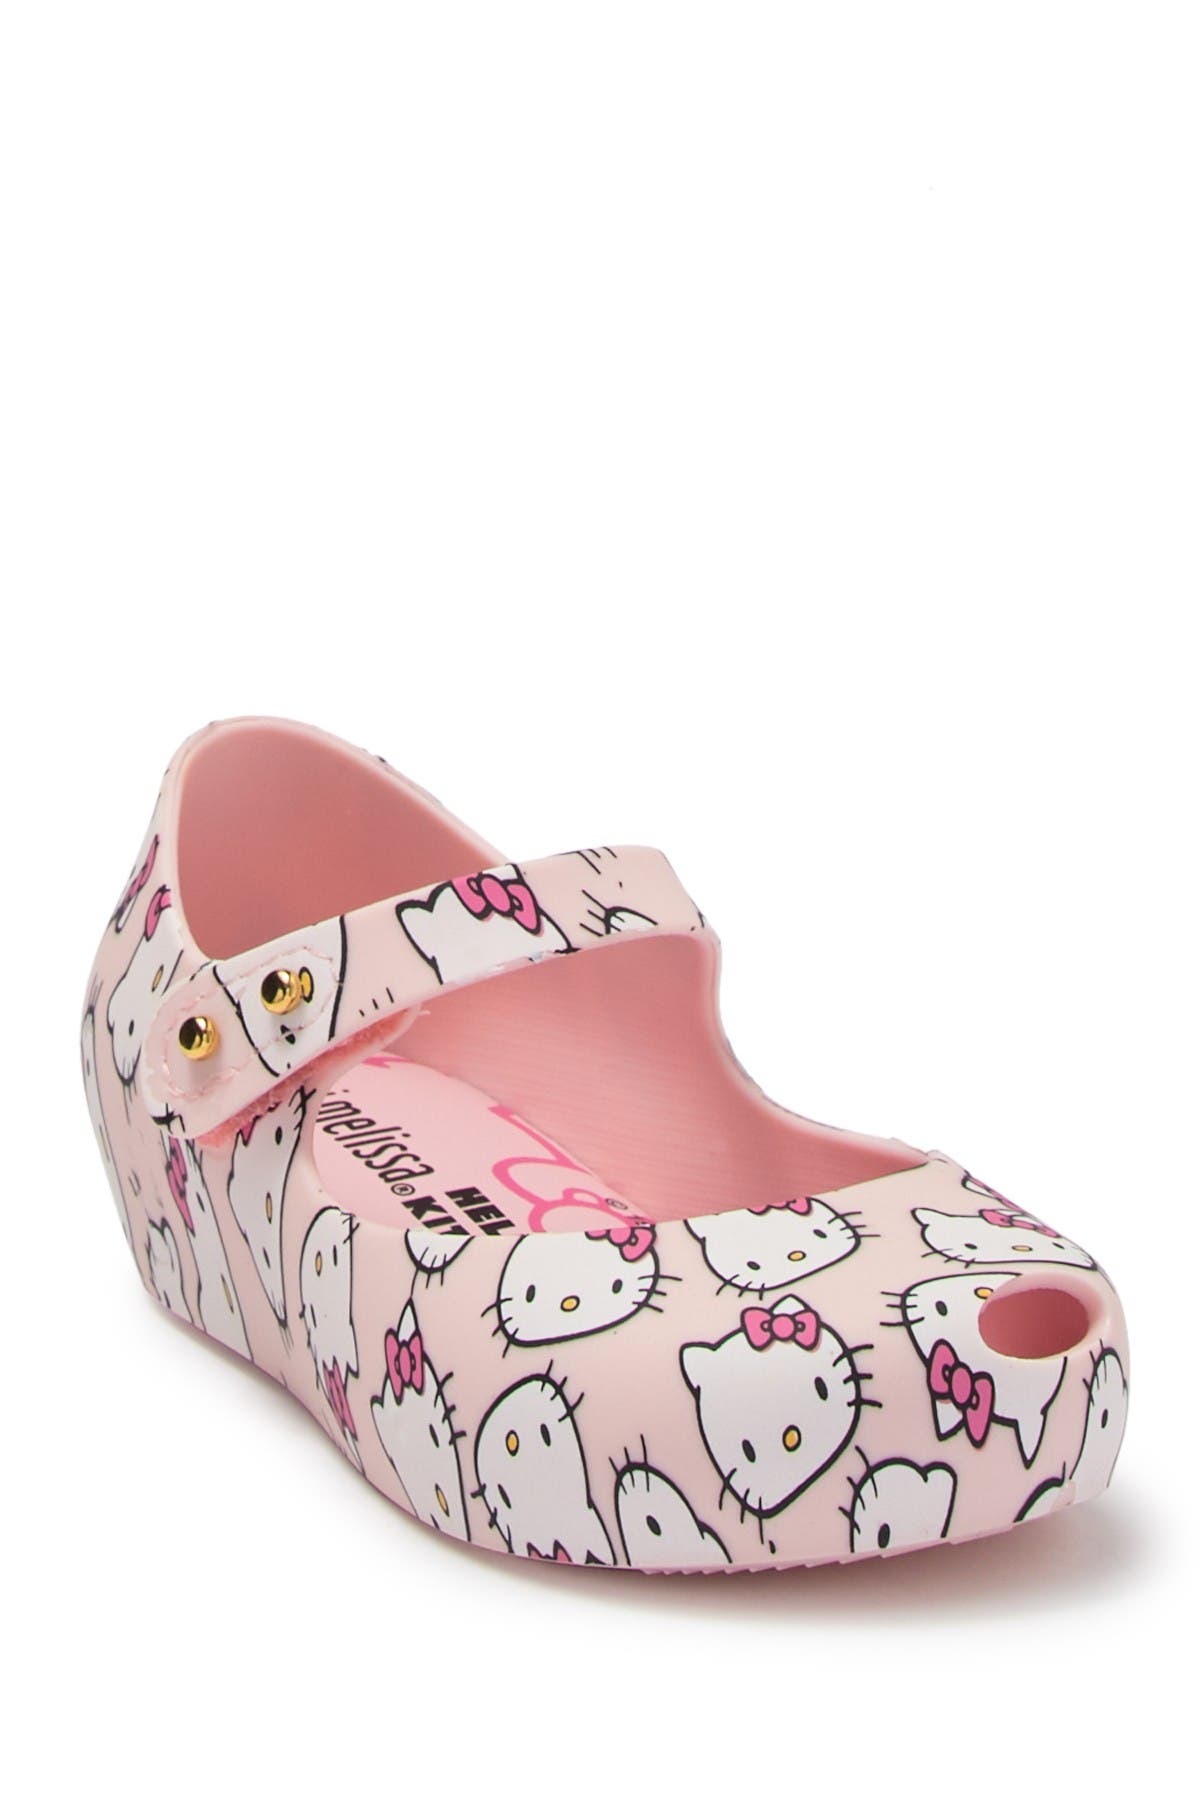 mini melissa hello kitty shoes